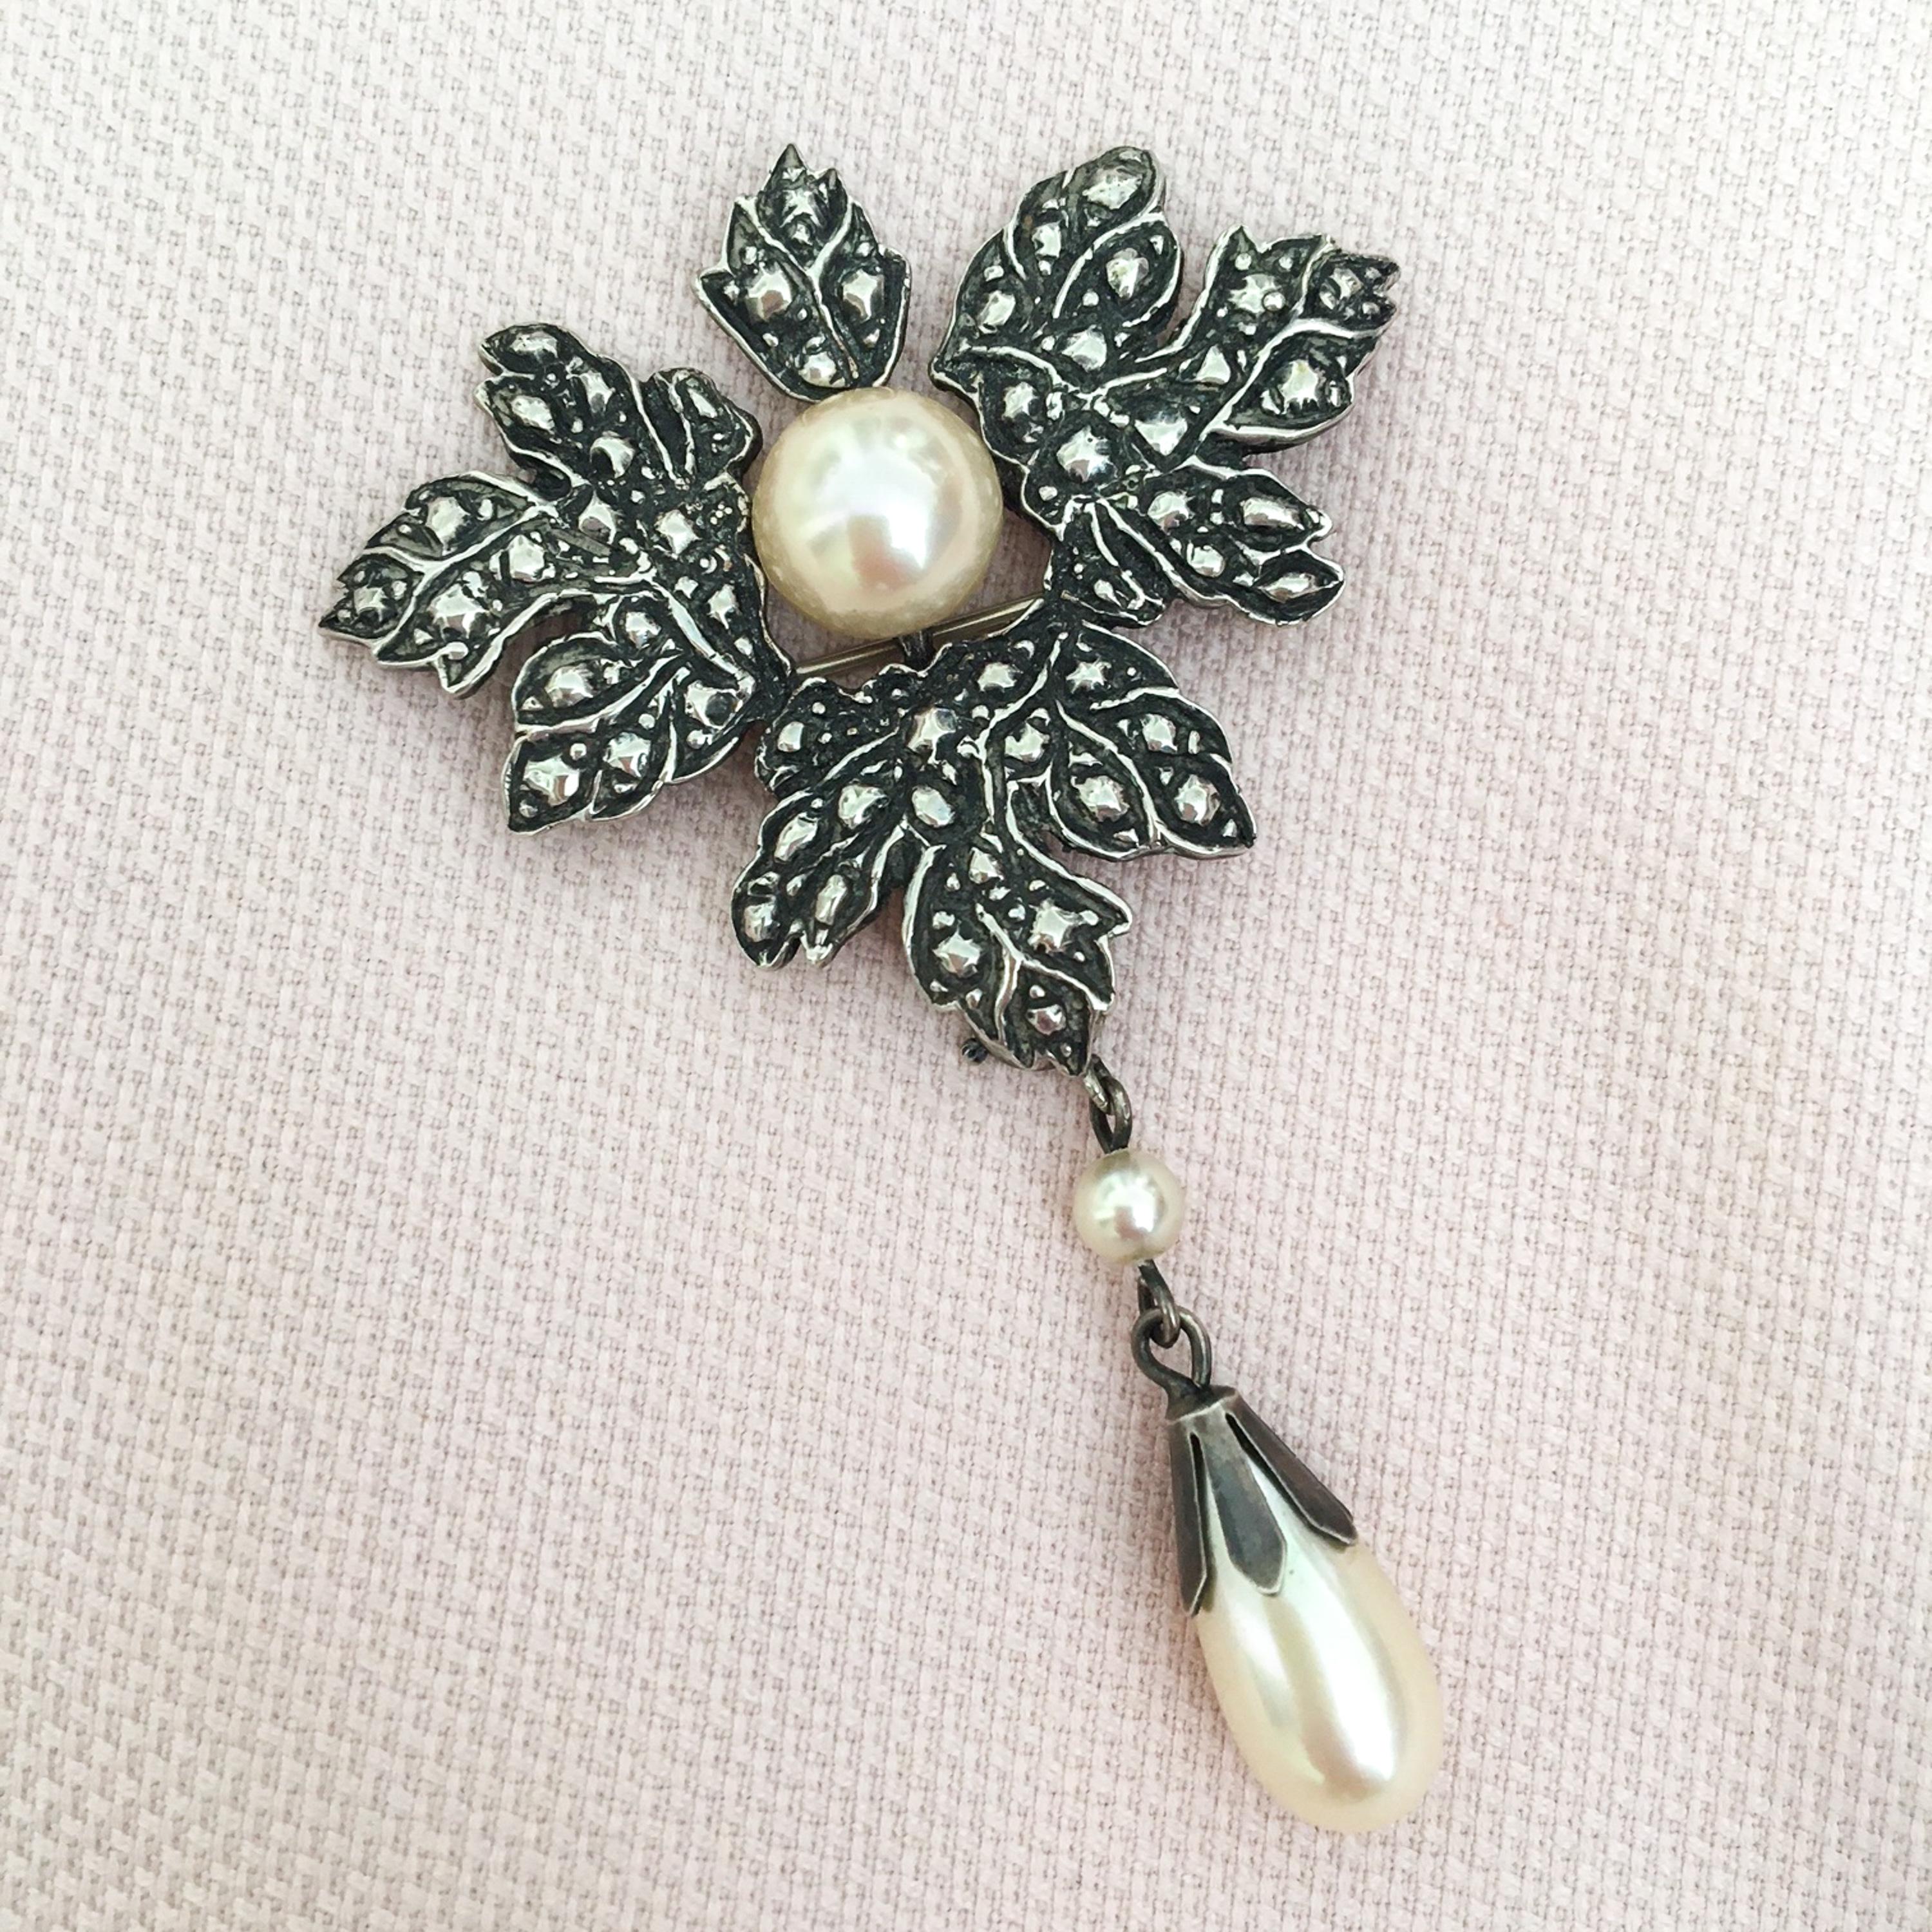 Oval Cut Silver Maple Leaf Pearl Pendant Brooch